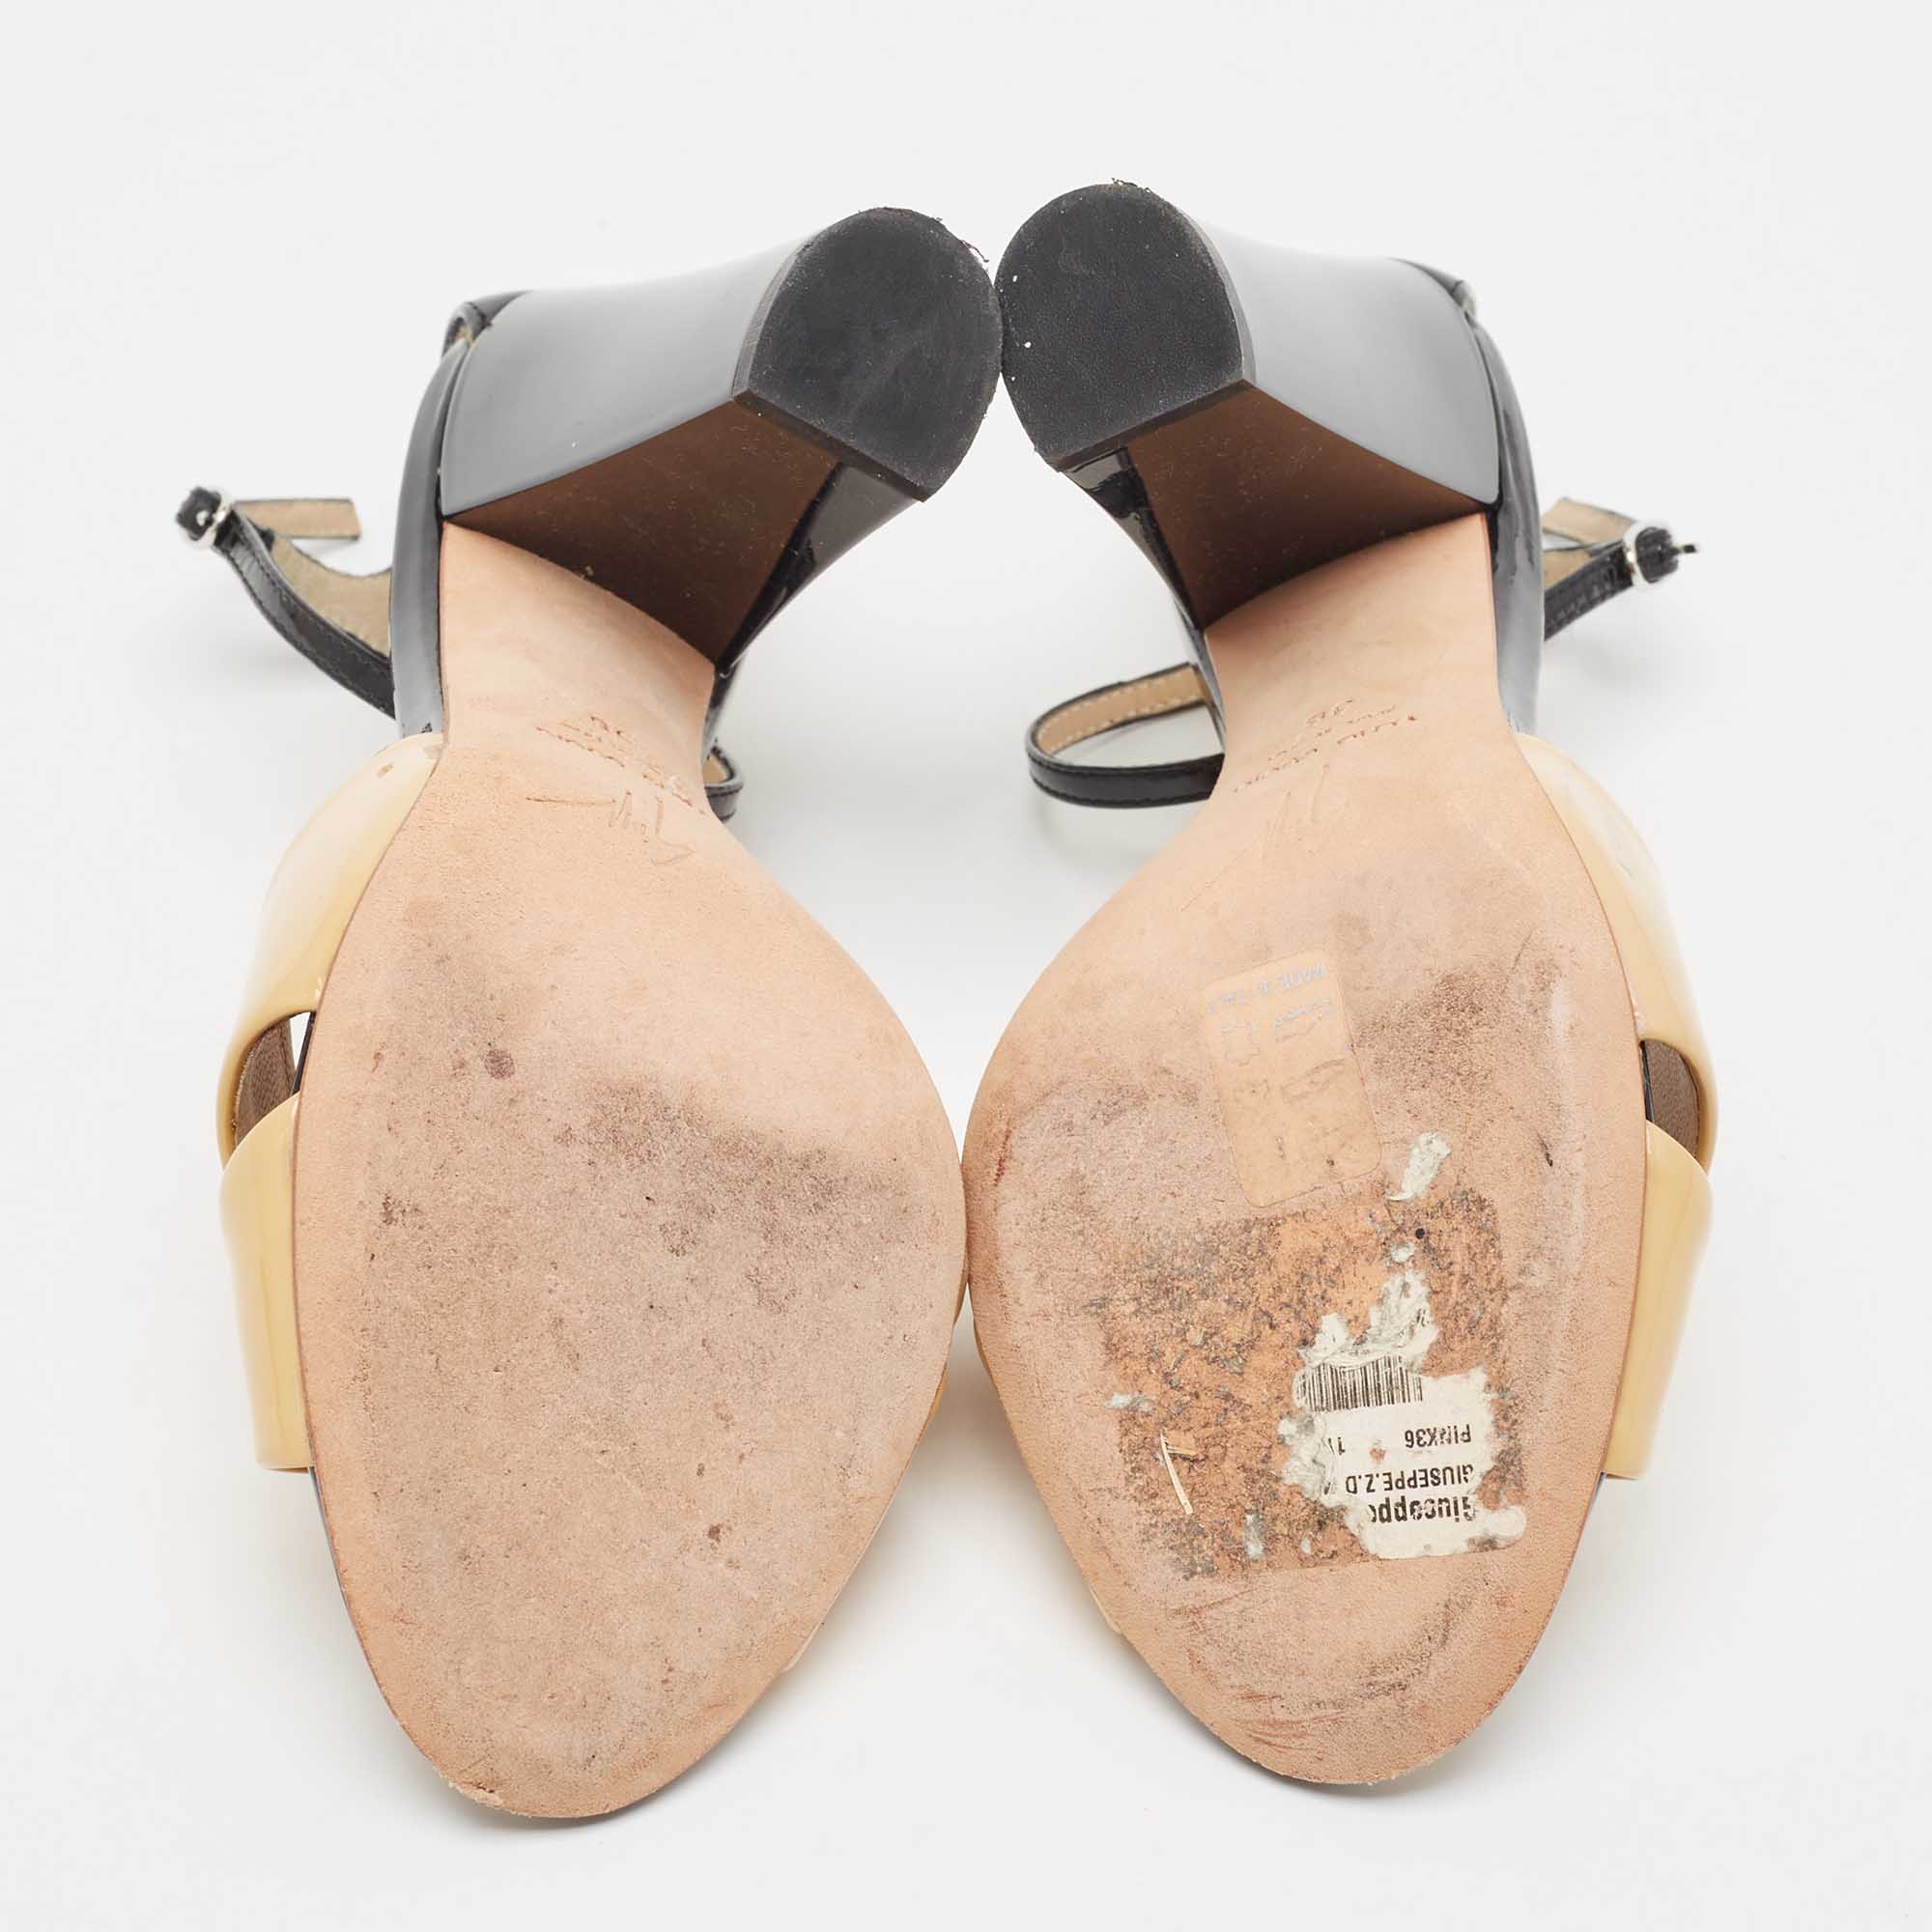 Giuseppe Zanotti Beige/Black Patent Leather Cross Strap Open Toe Sandals Size 36